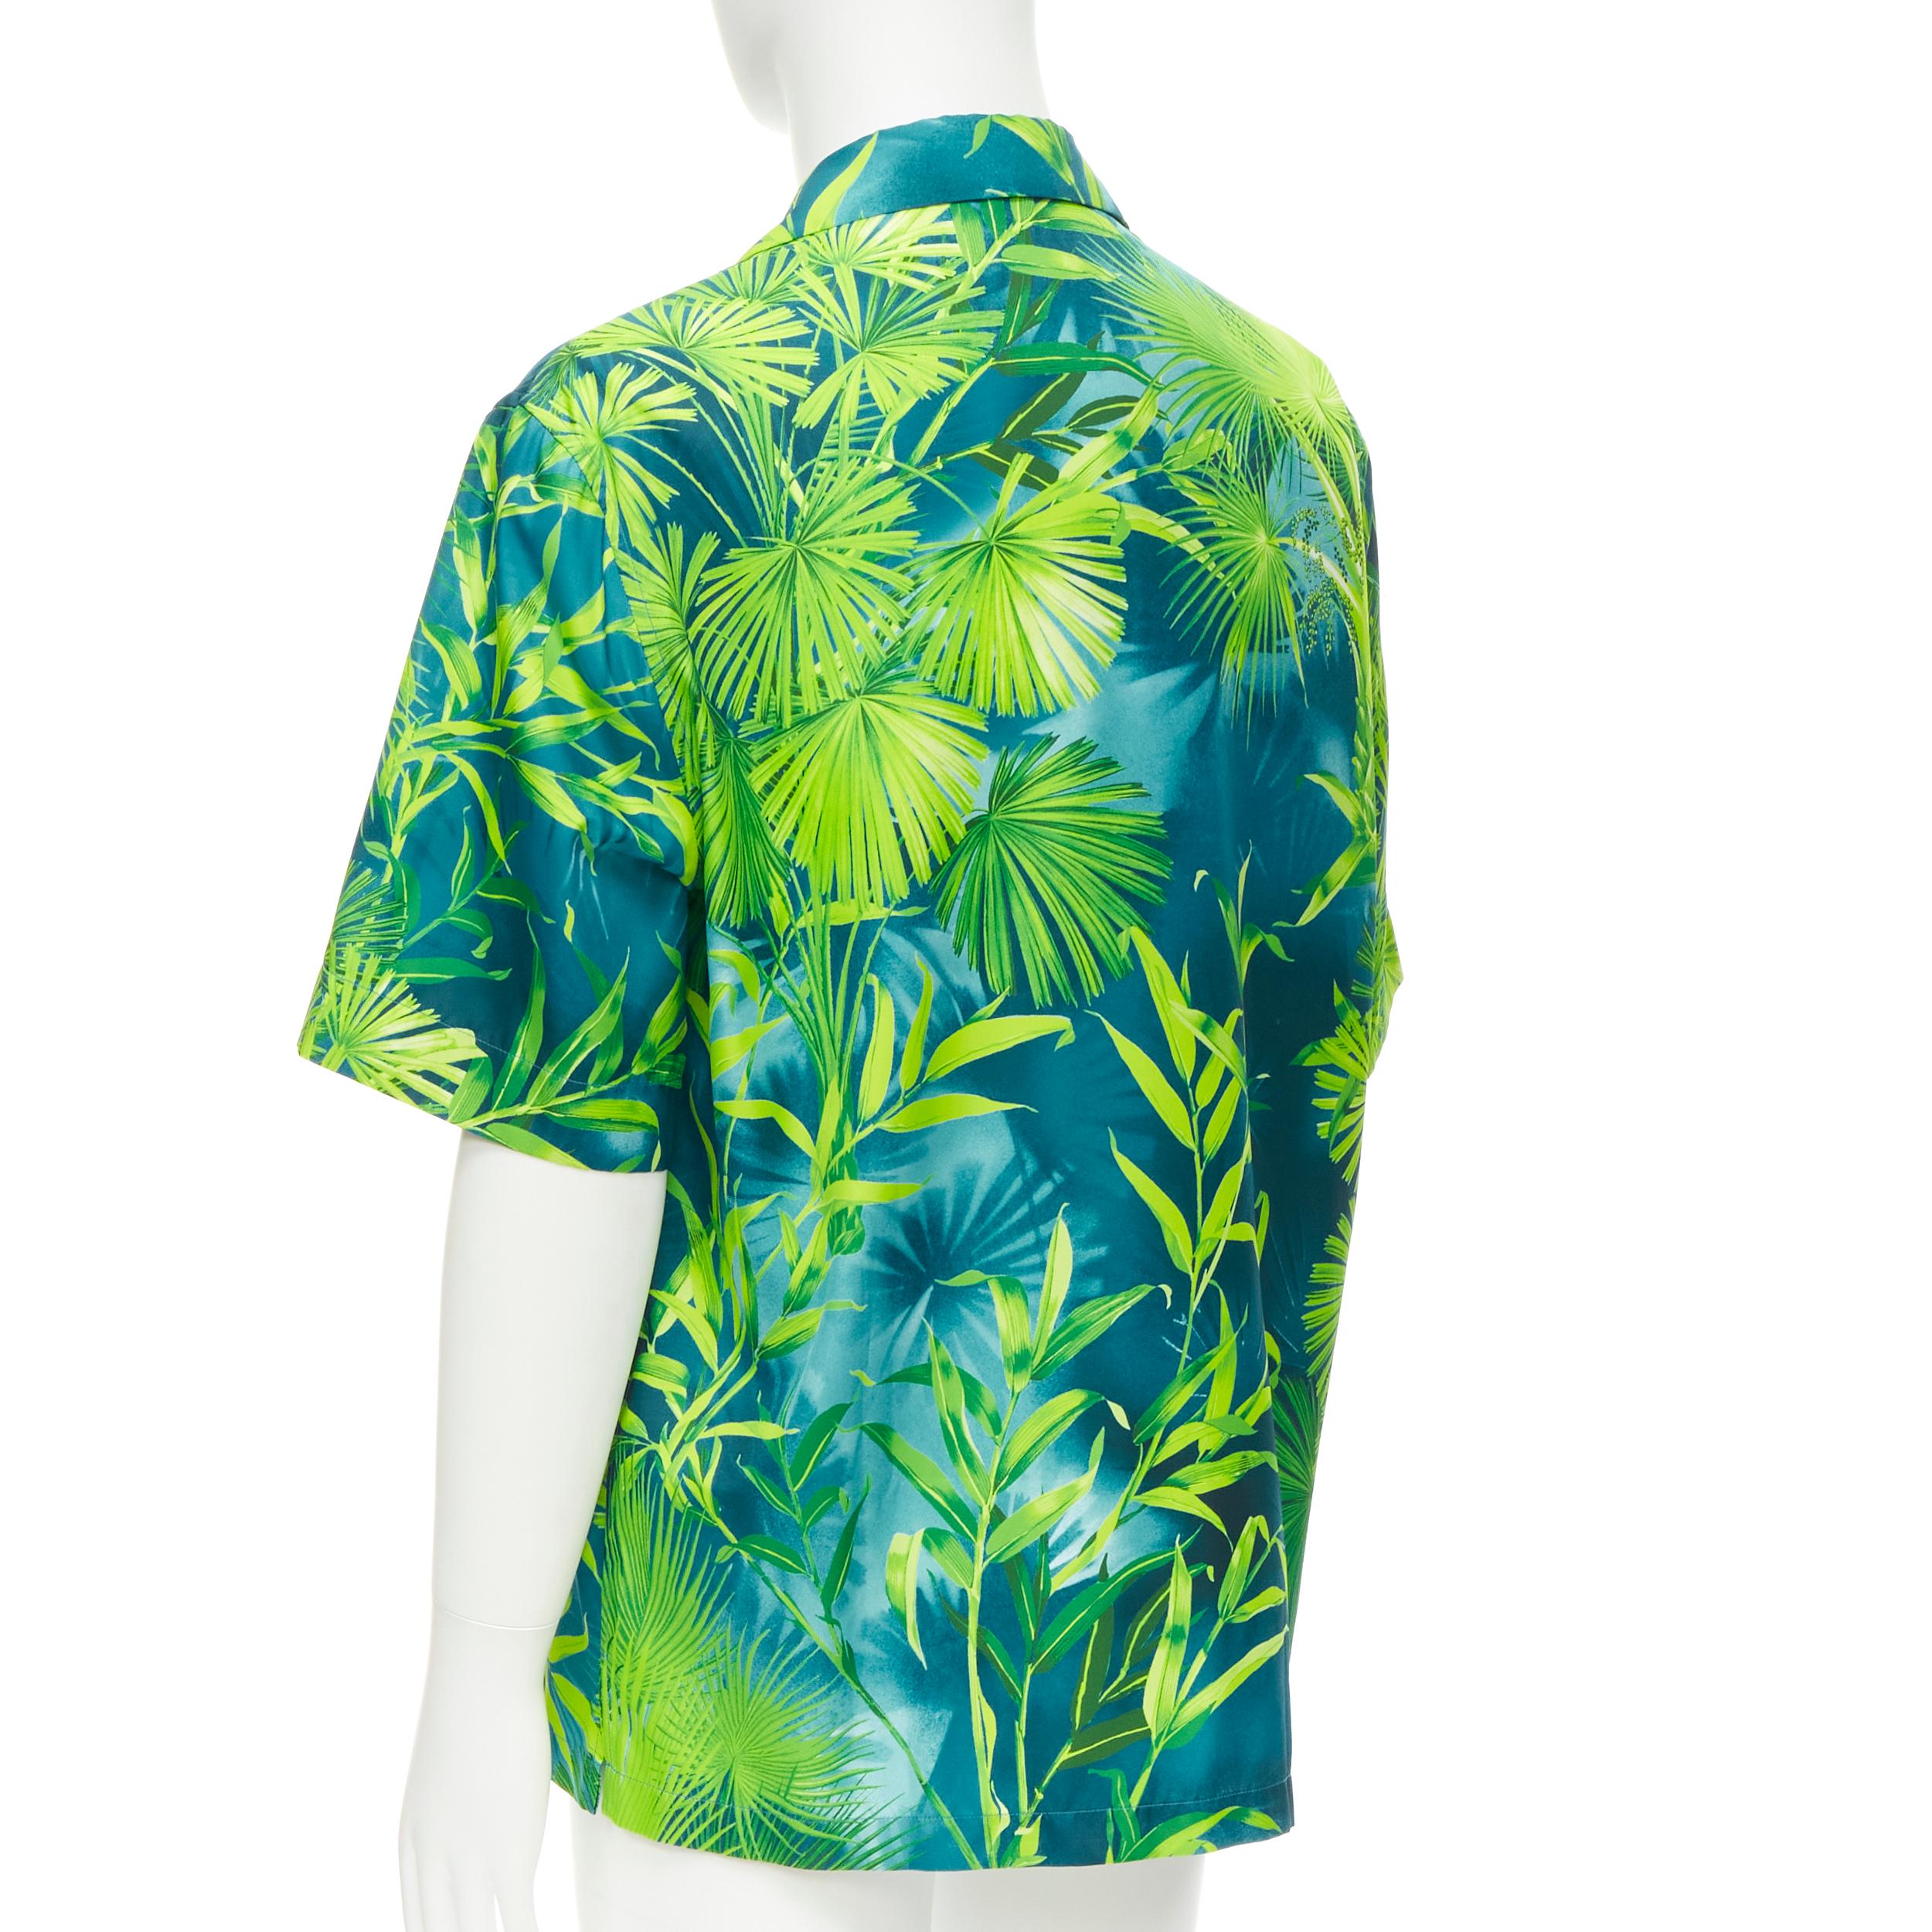 Green new VERSACE 2020 Iconic JLo Jungle print green tropical print shirt EU38 S